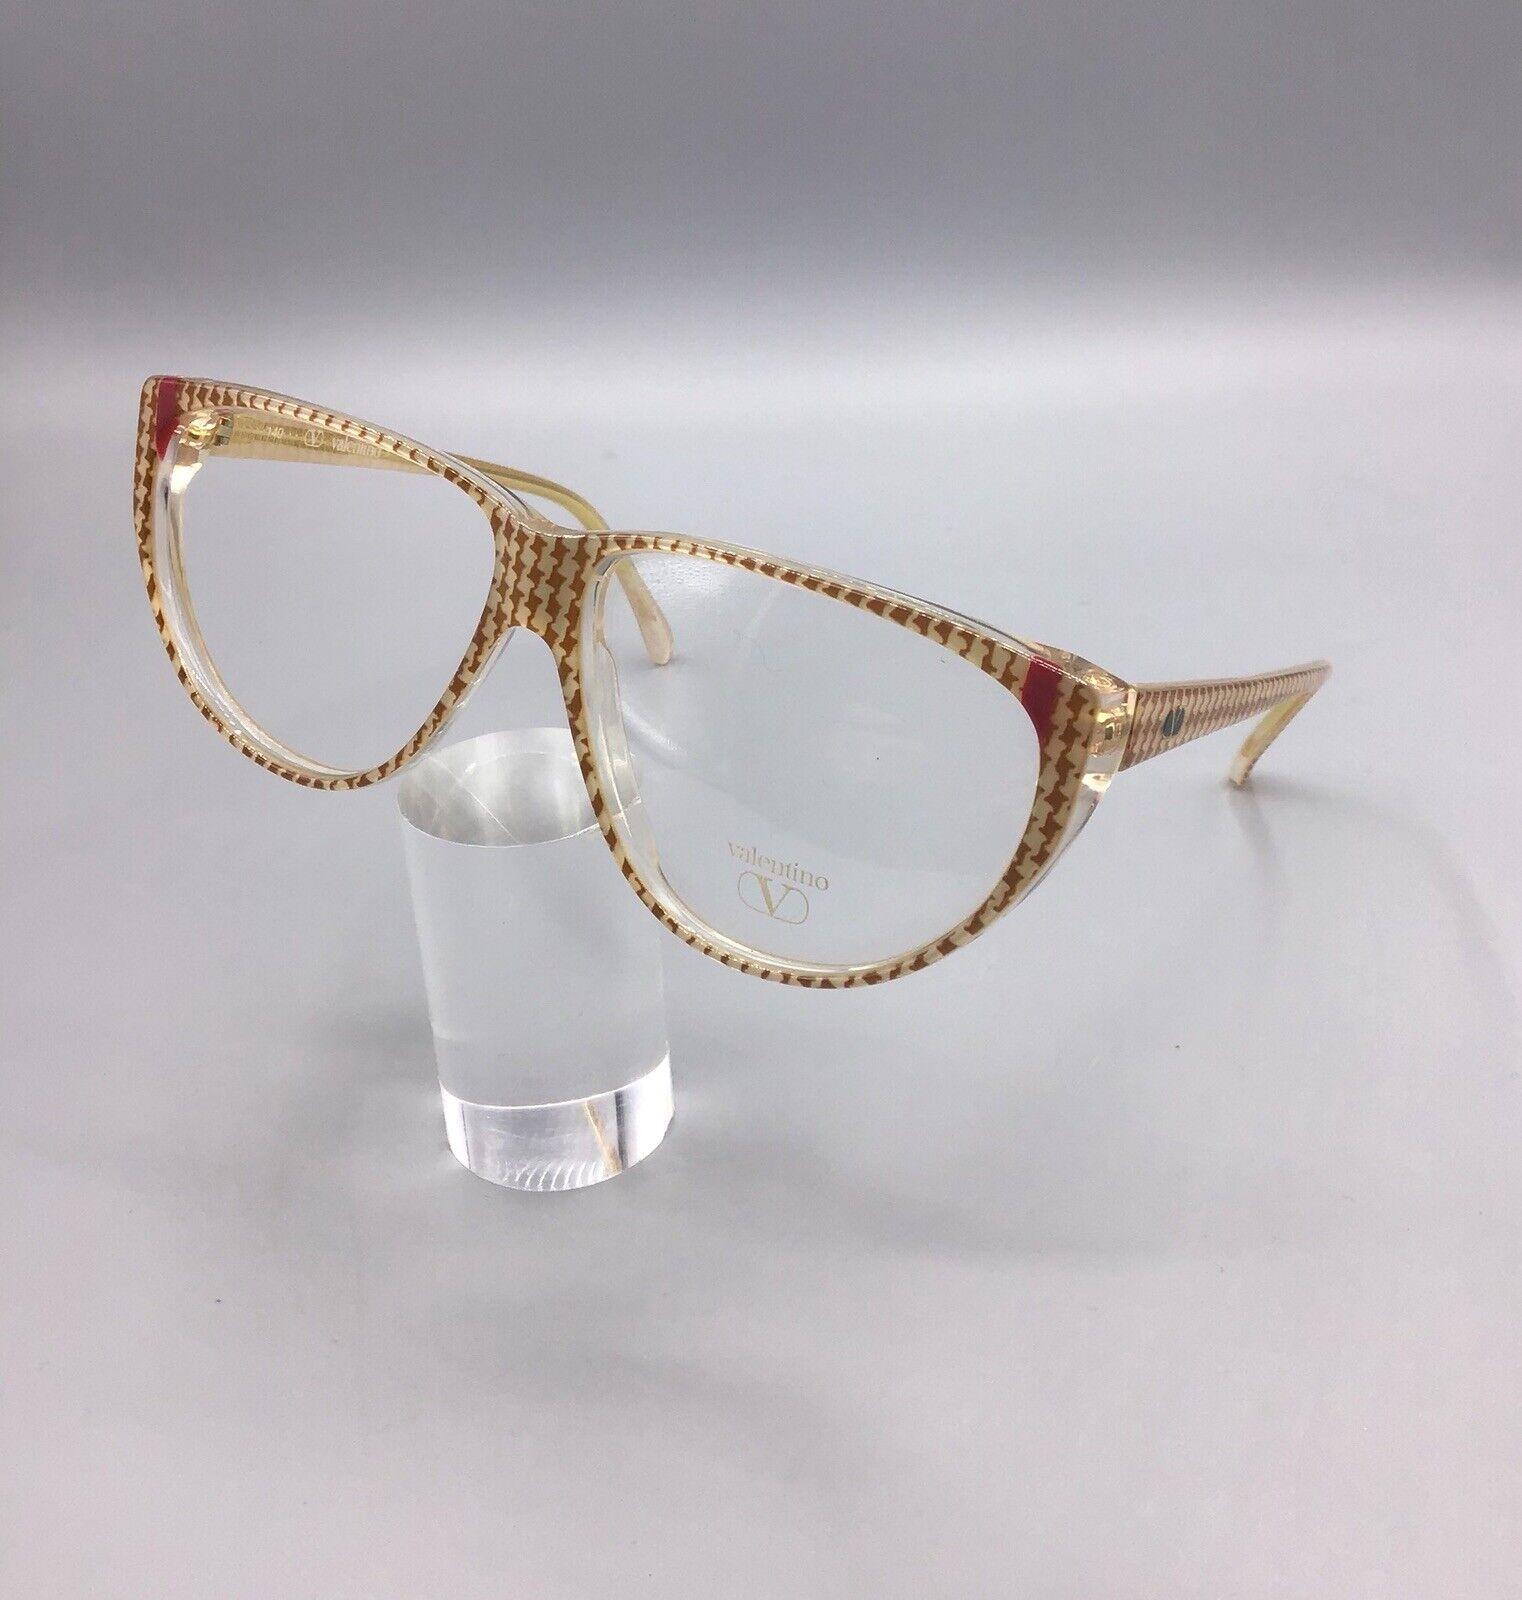 valentino occhiale vintage Italy made 129 p6 brillen lunettes